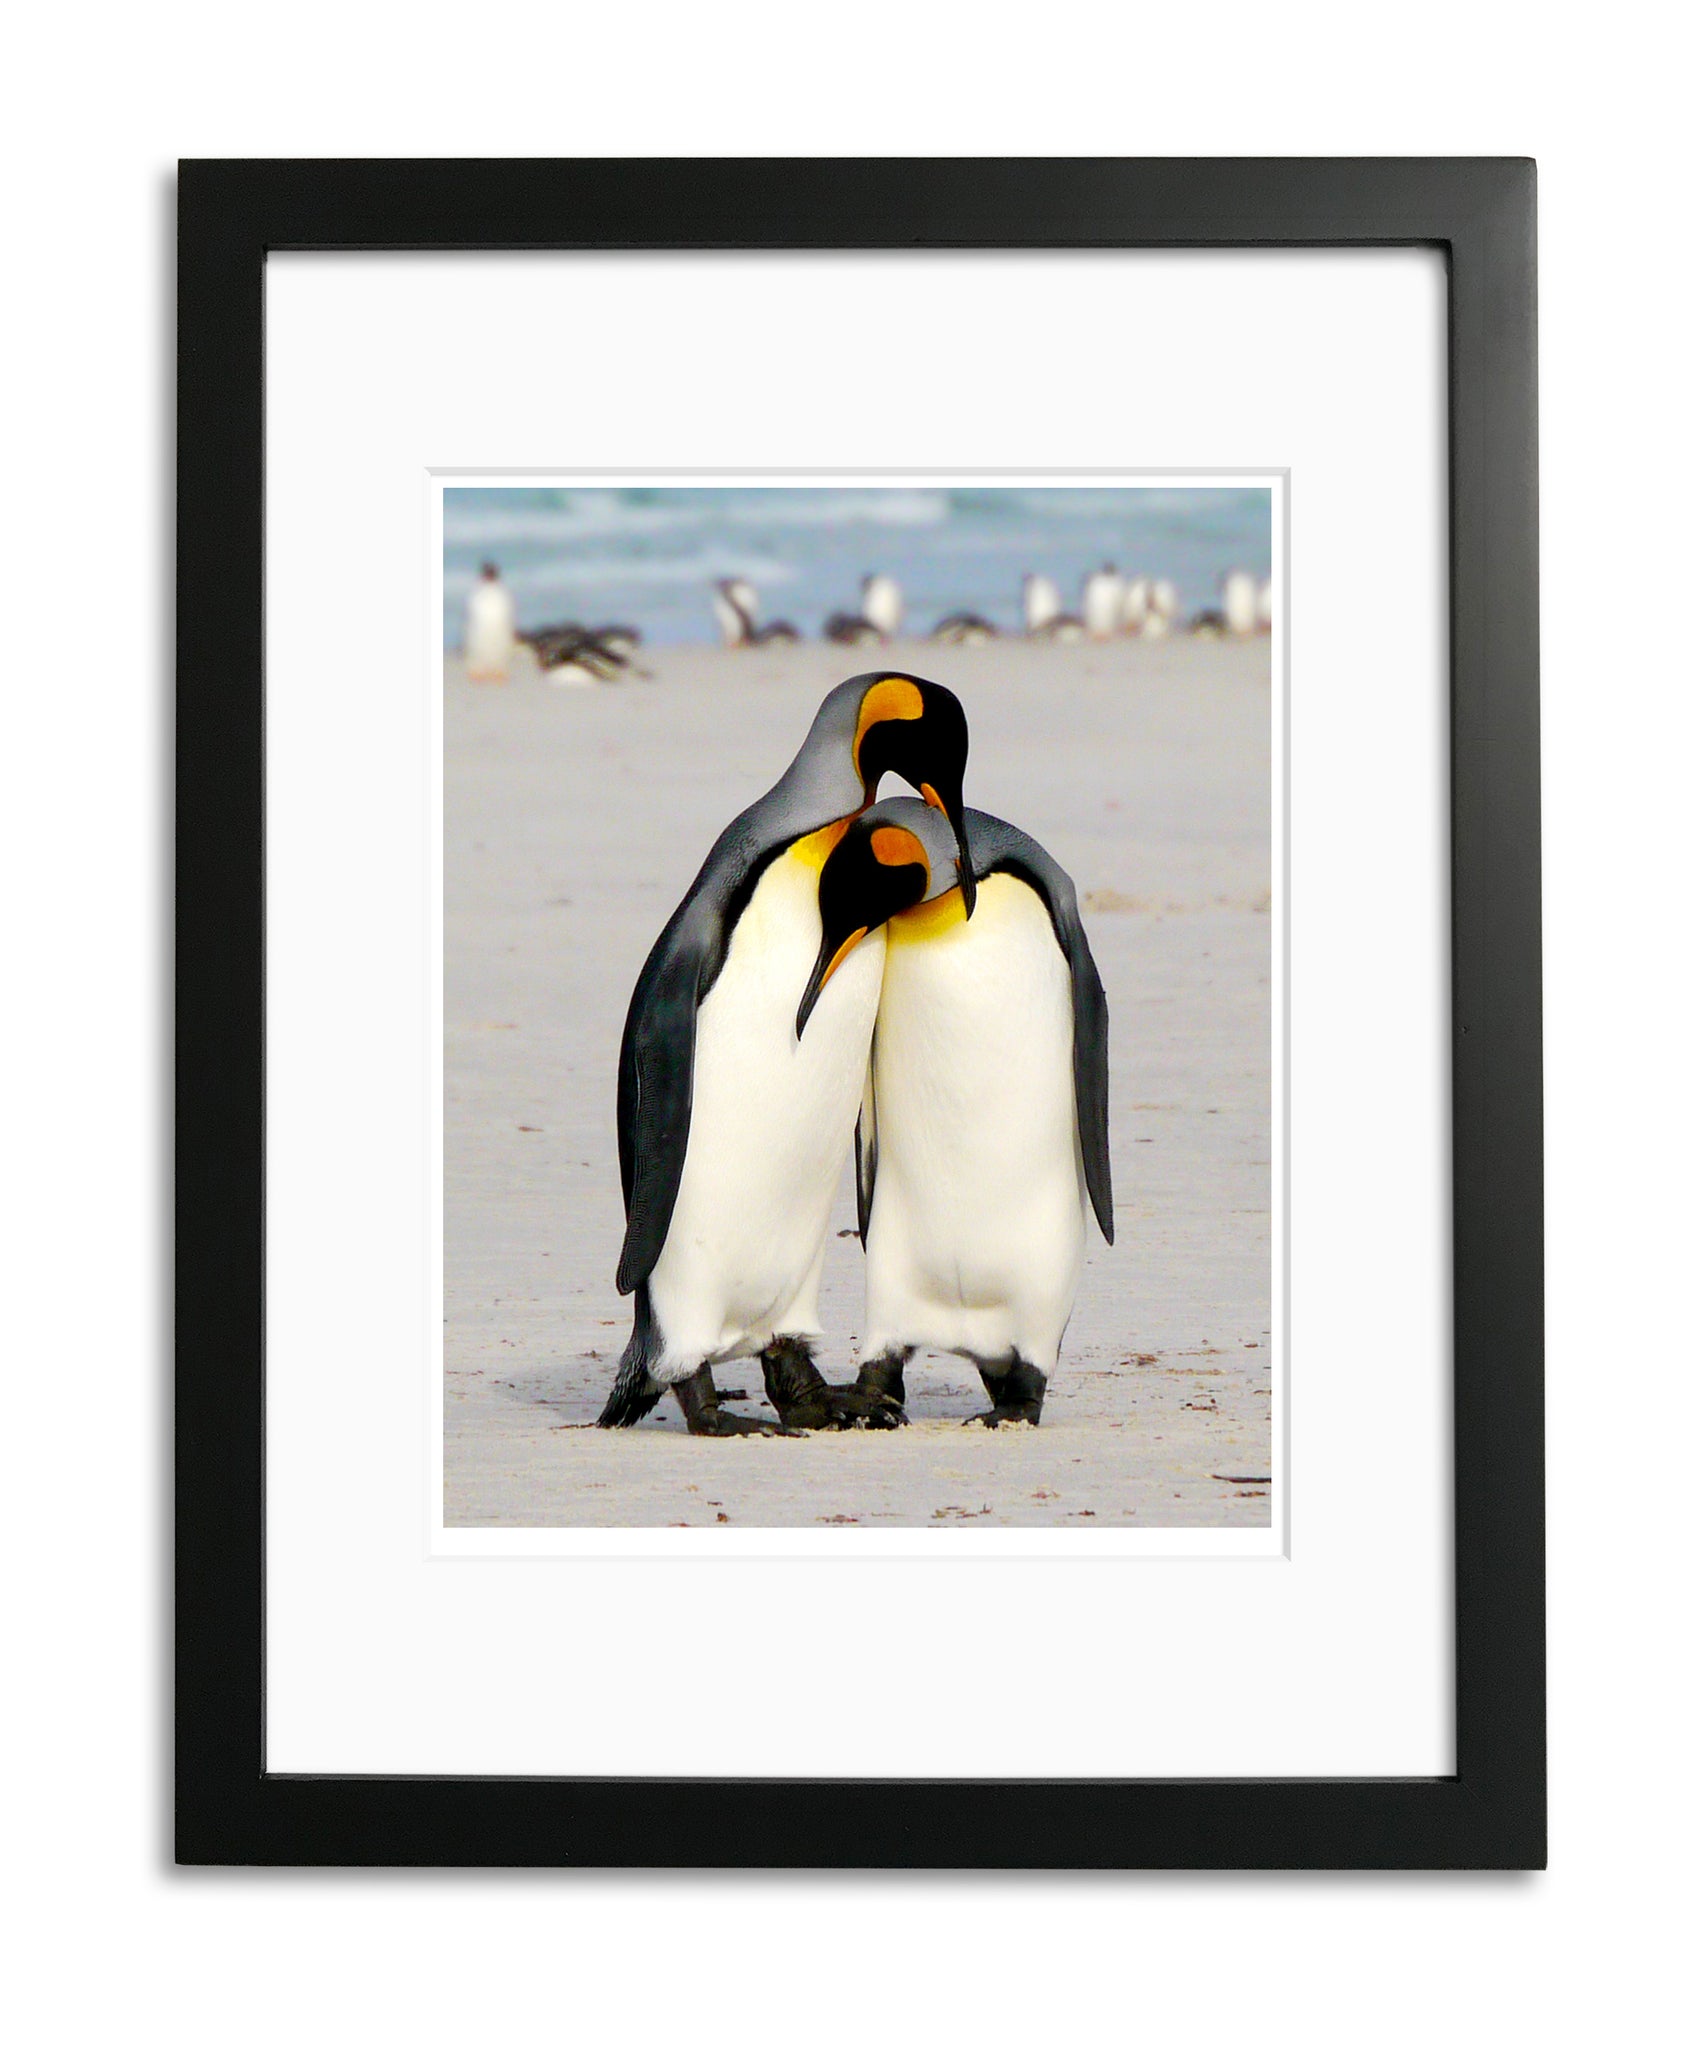 I Love You, King Penguins, Falkland Islands, by Robert Ross